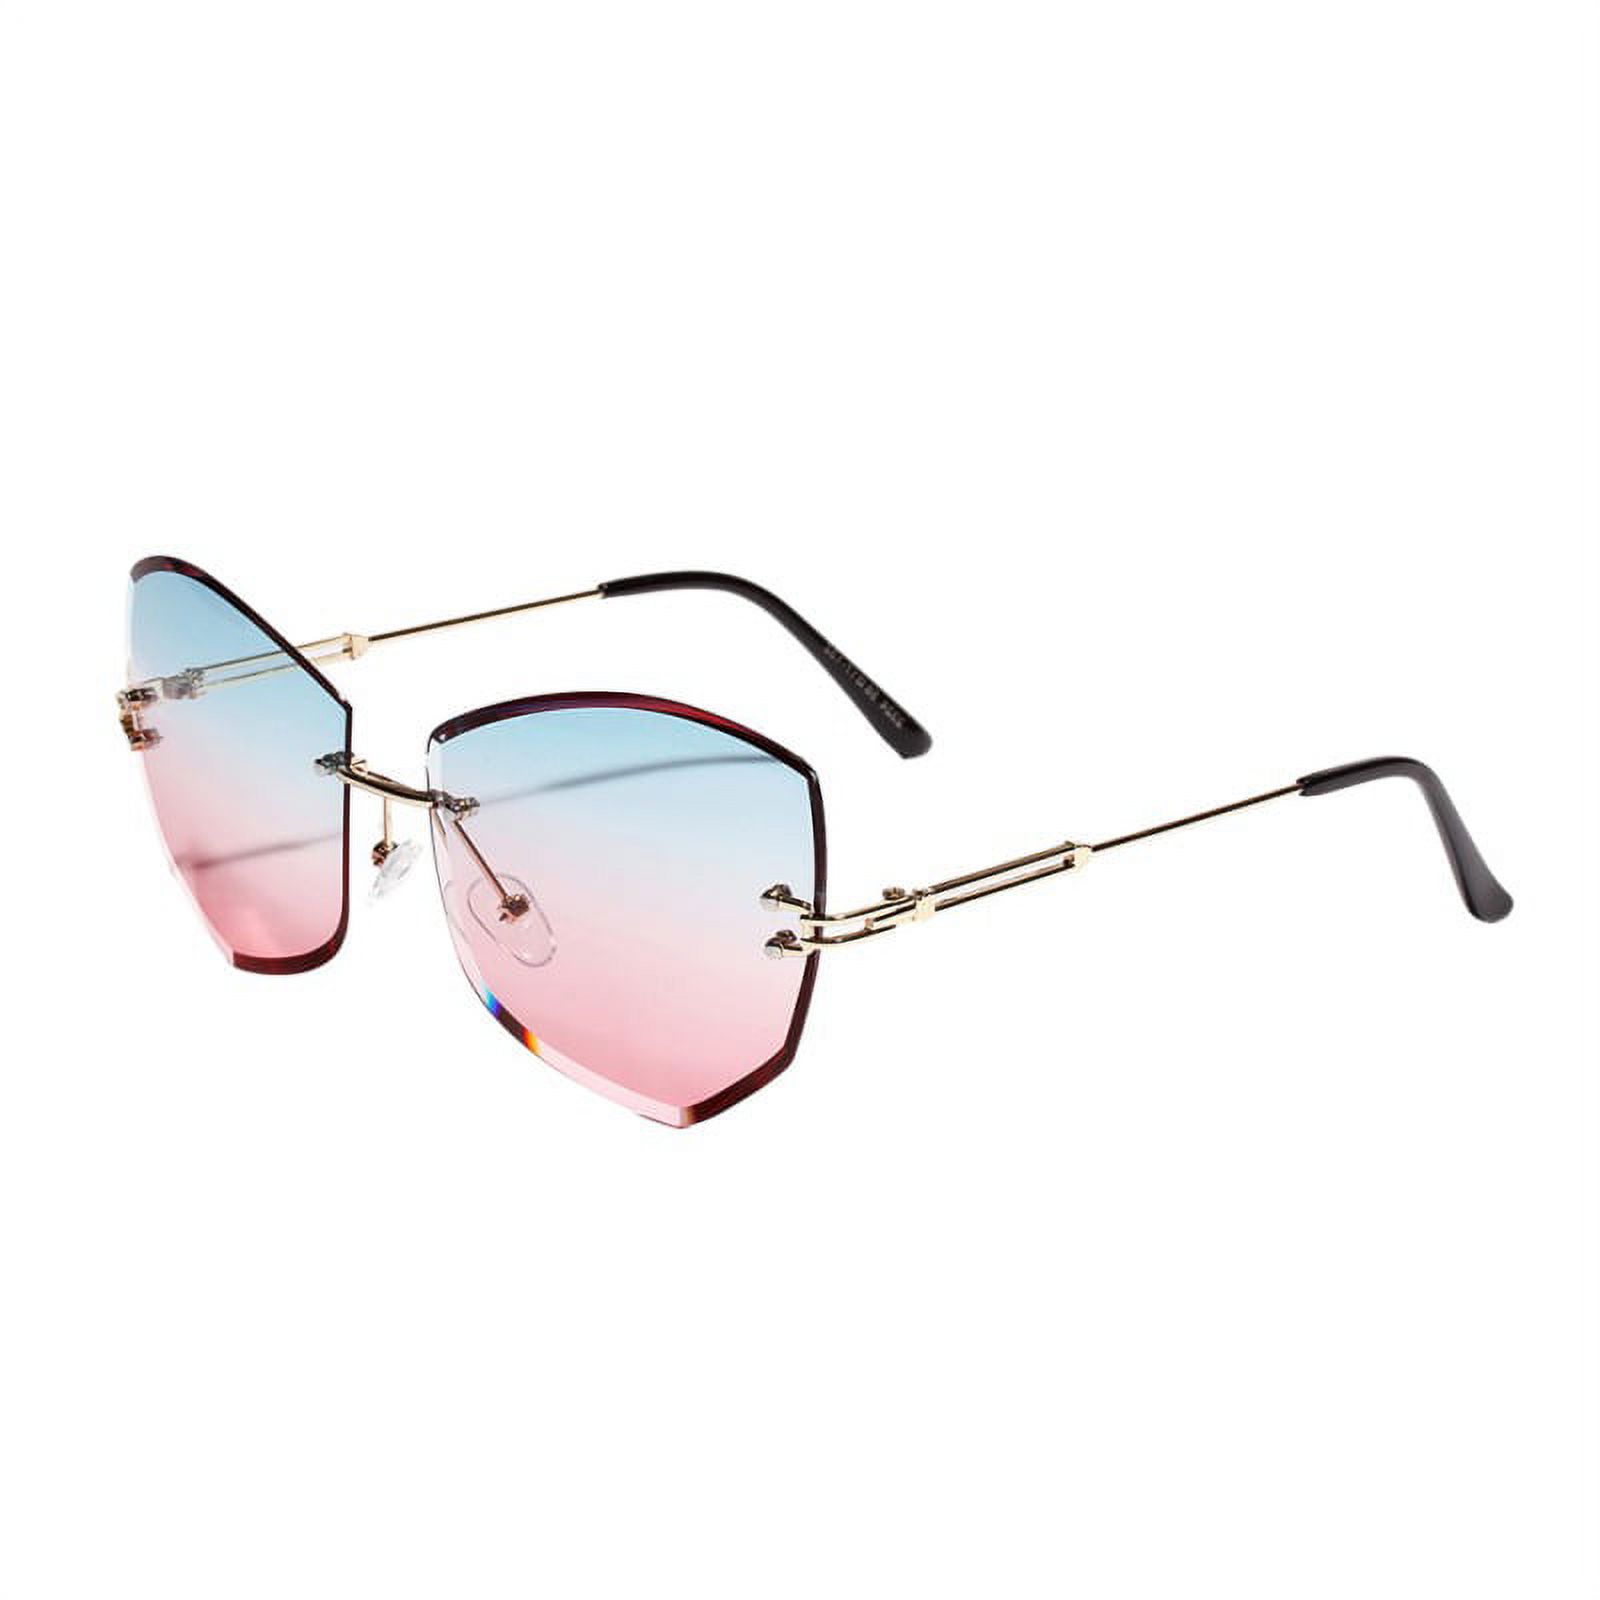 Women Shades Rimless Sunglasses Cat Eye Diamond-shaped Lens Sunglass Metal Frame Sunglasses for Women Men - image 1 of 4